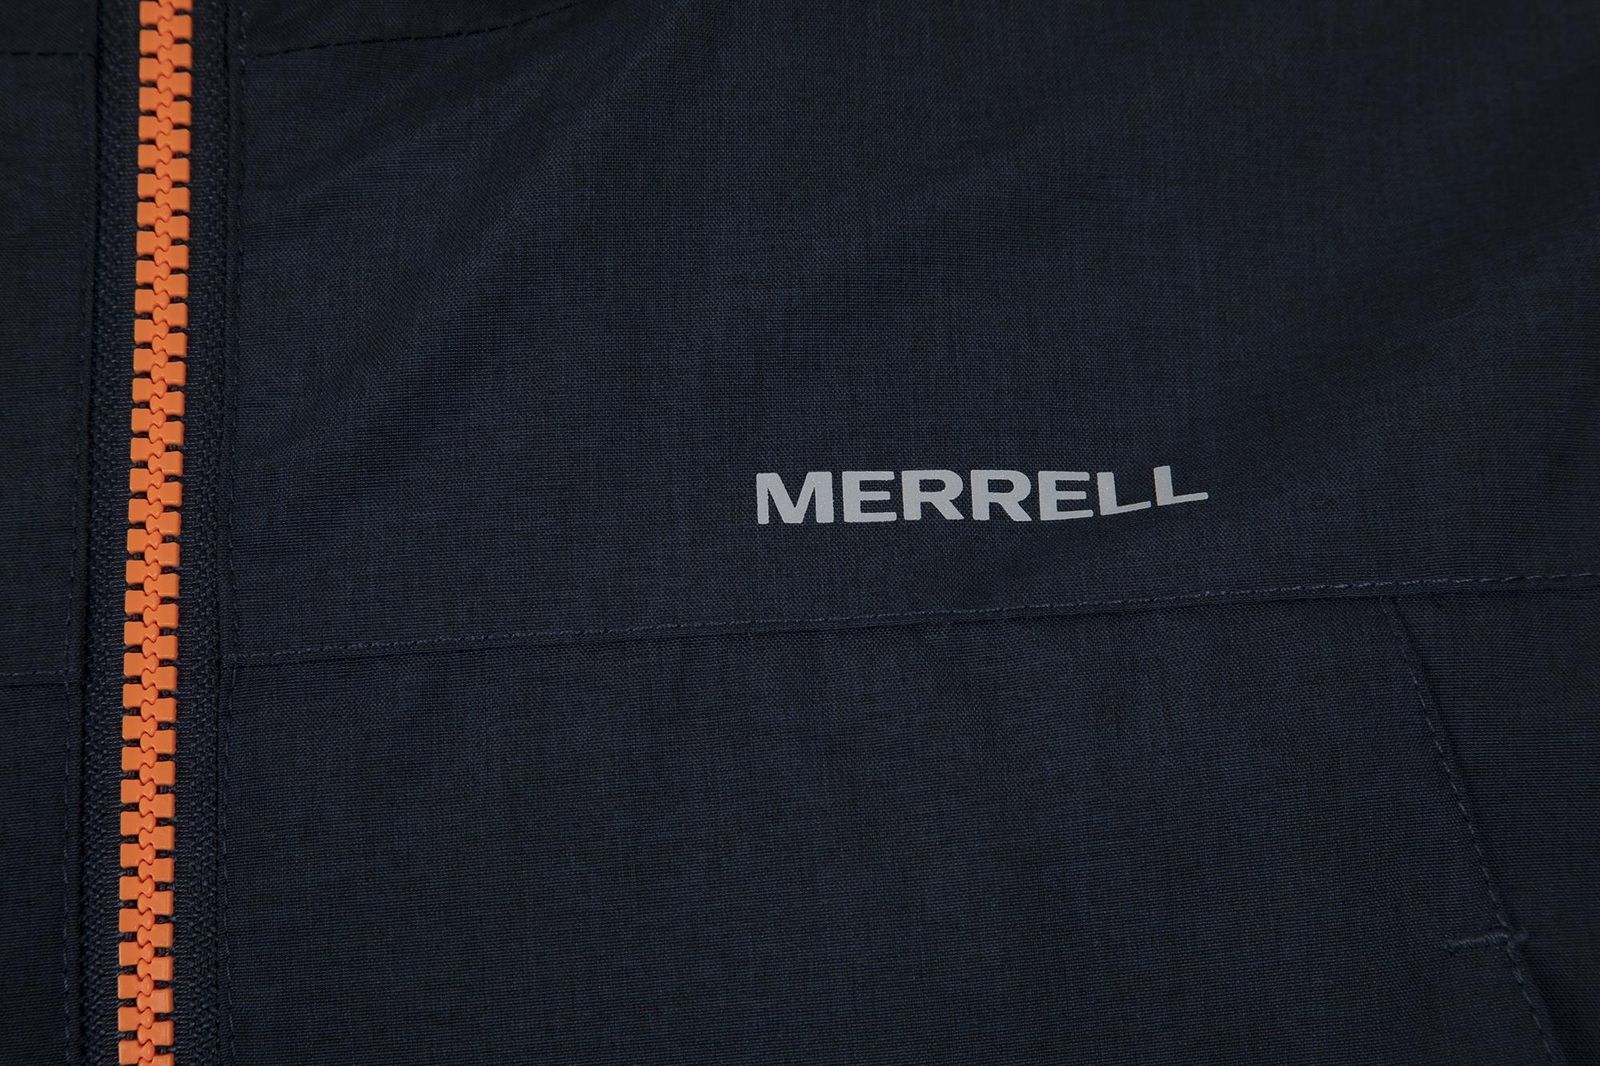   Merrell Men's Windbreaker, : -. S19AMRJAM04-Z4.  56